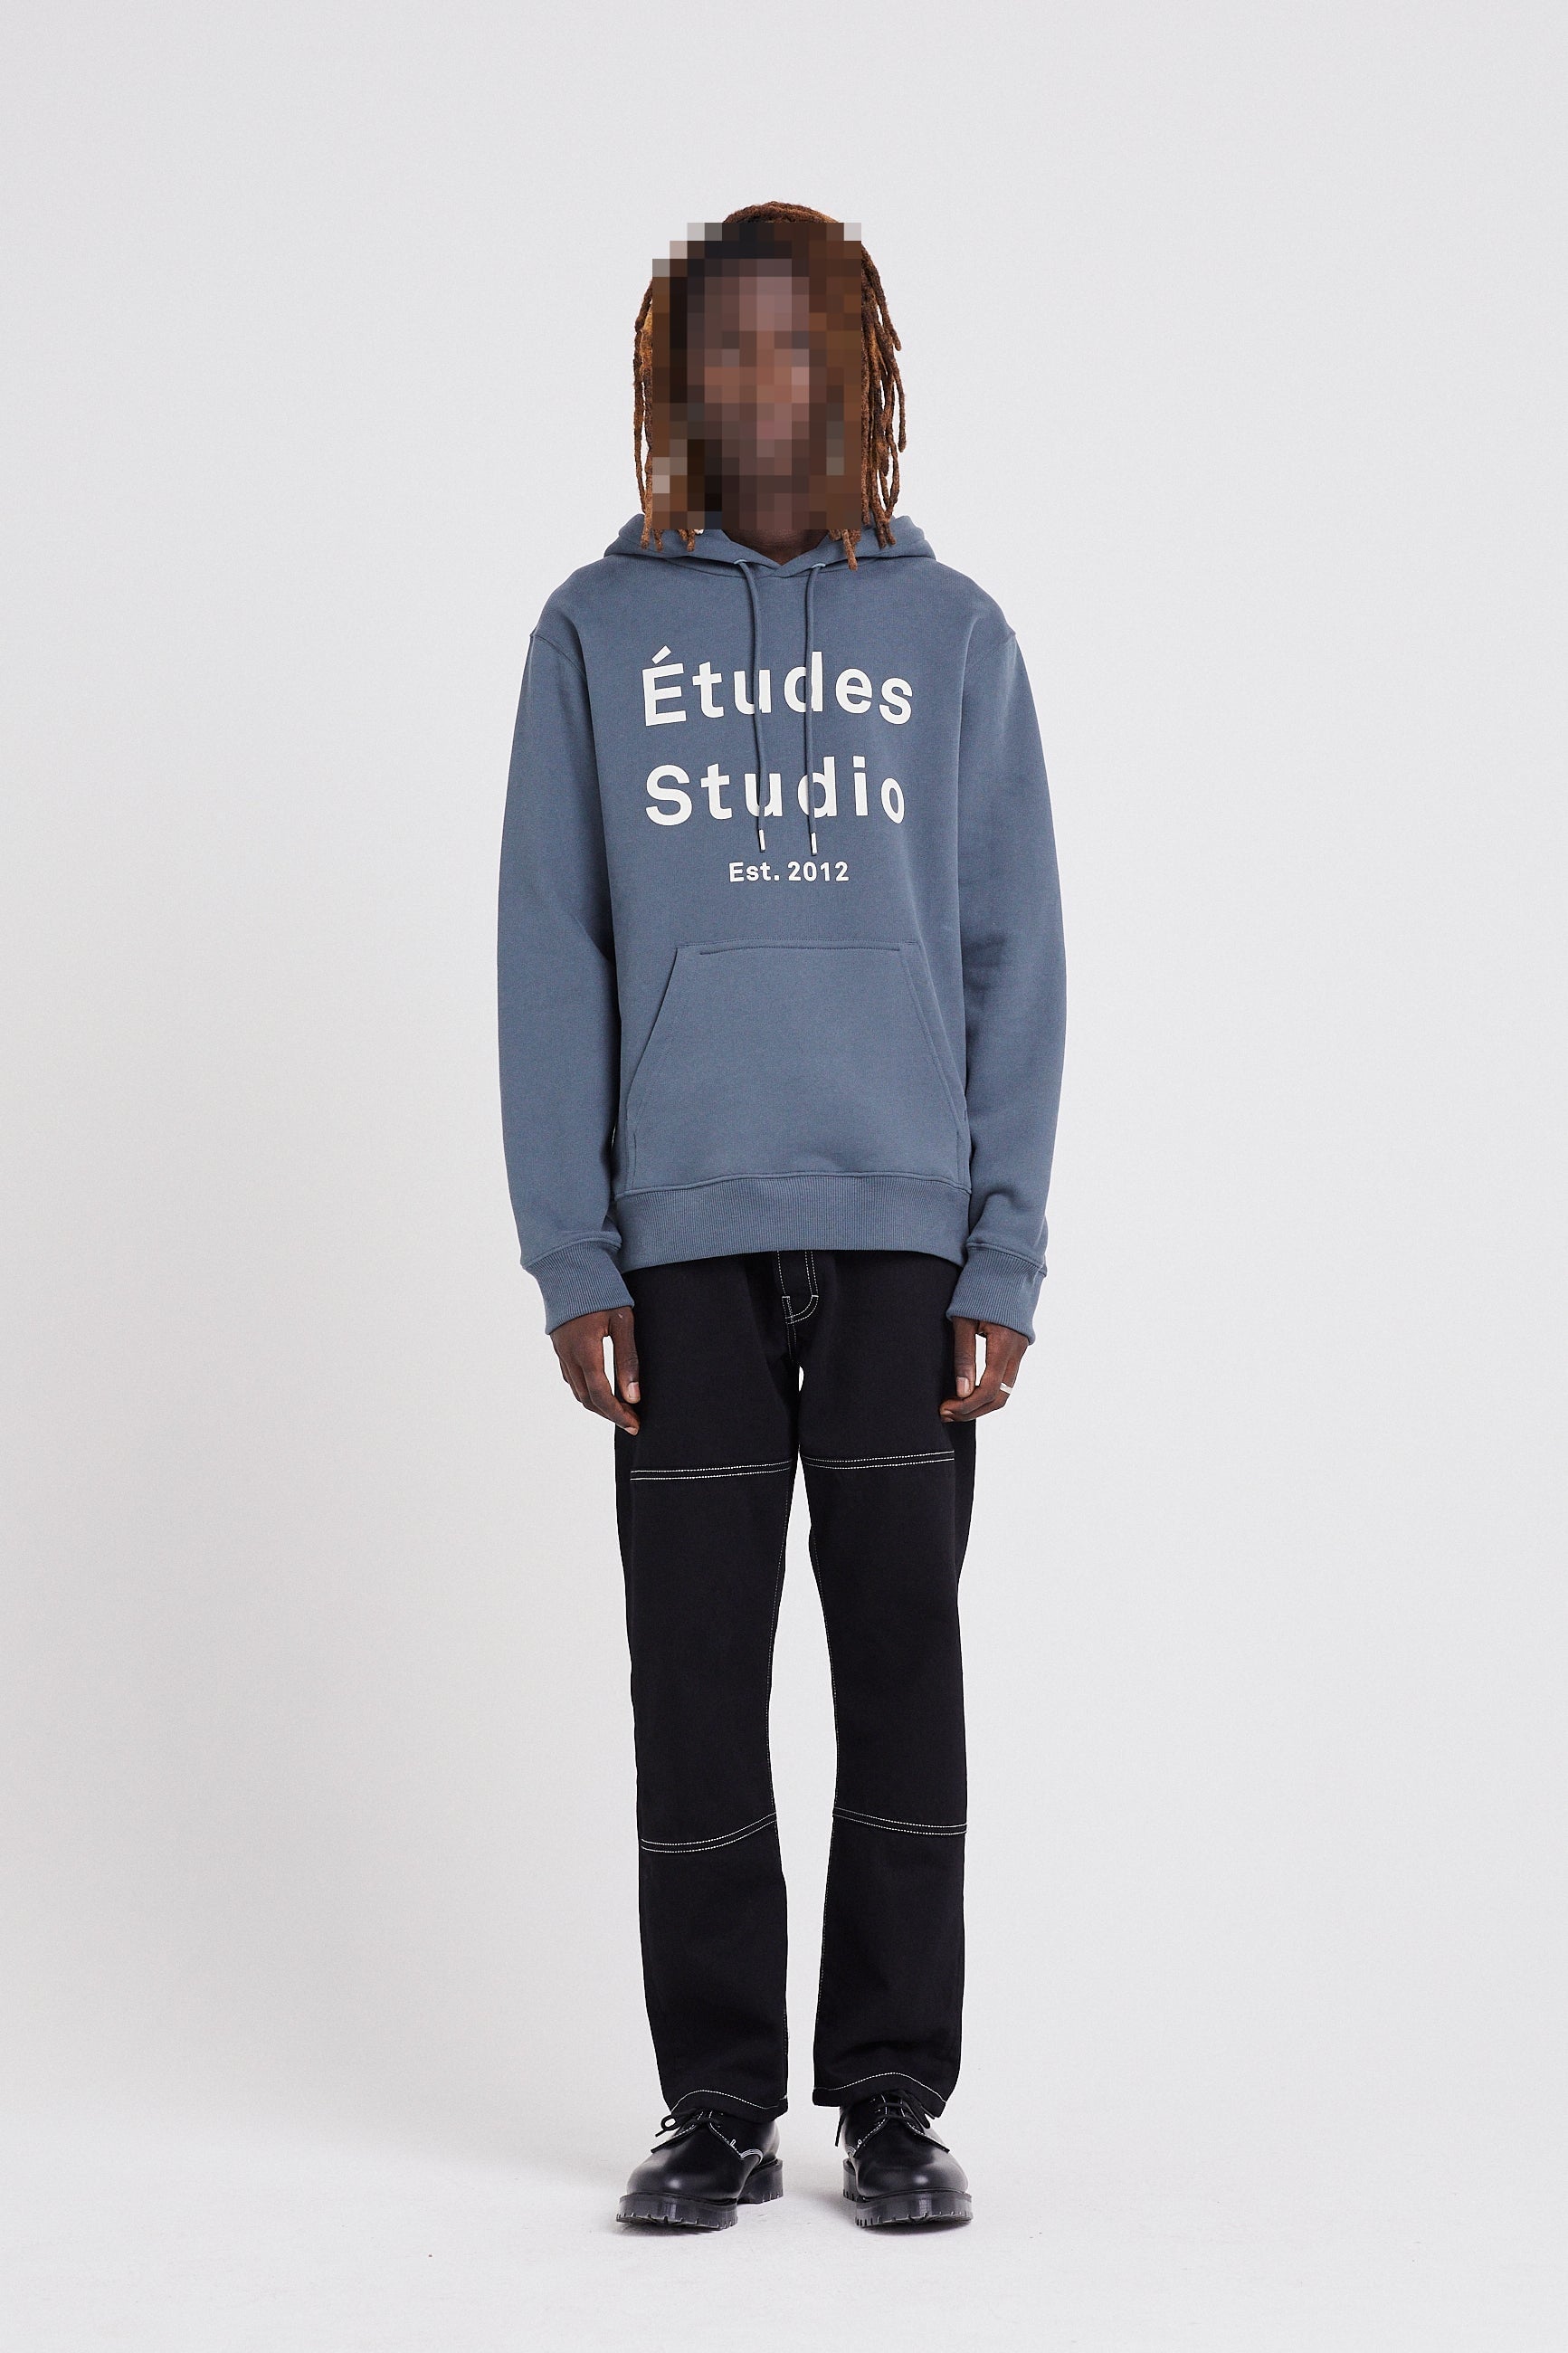 Études KLEIN ÉTUDES STUDIO SLATE sweatshirt 1